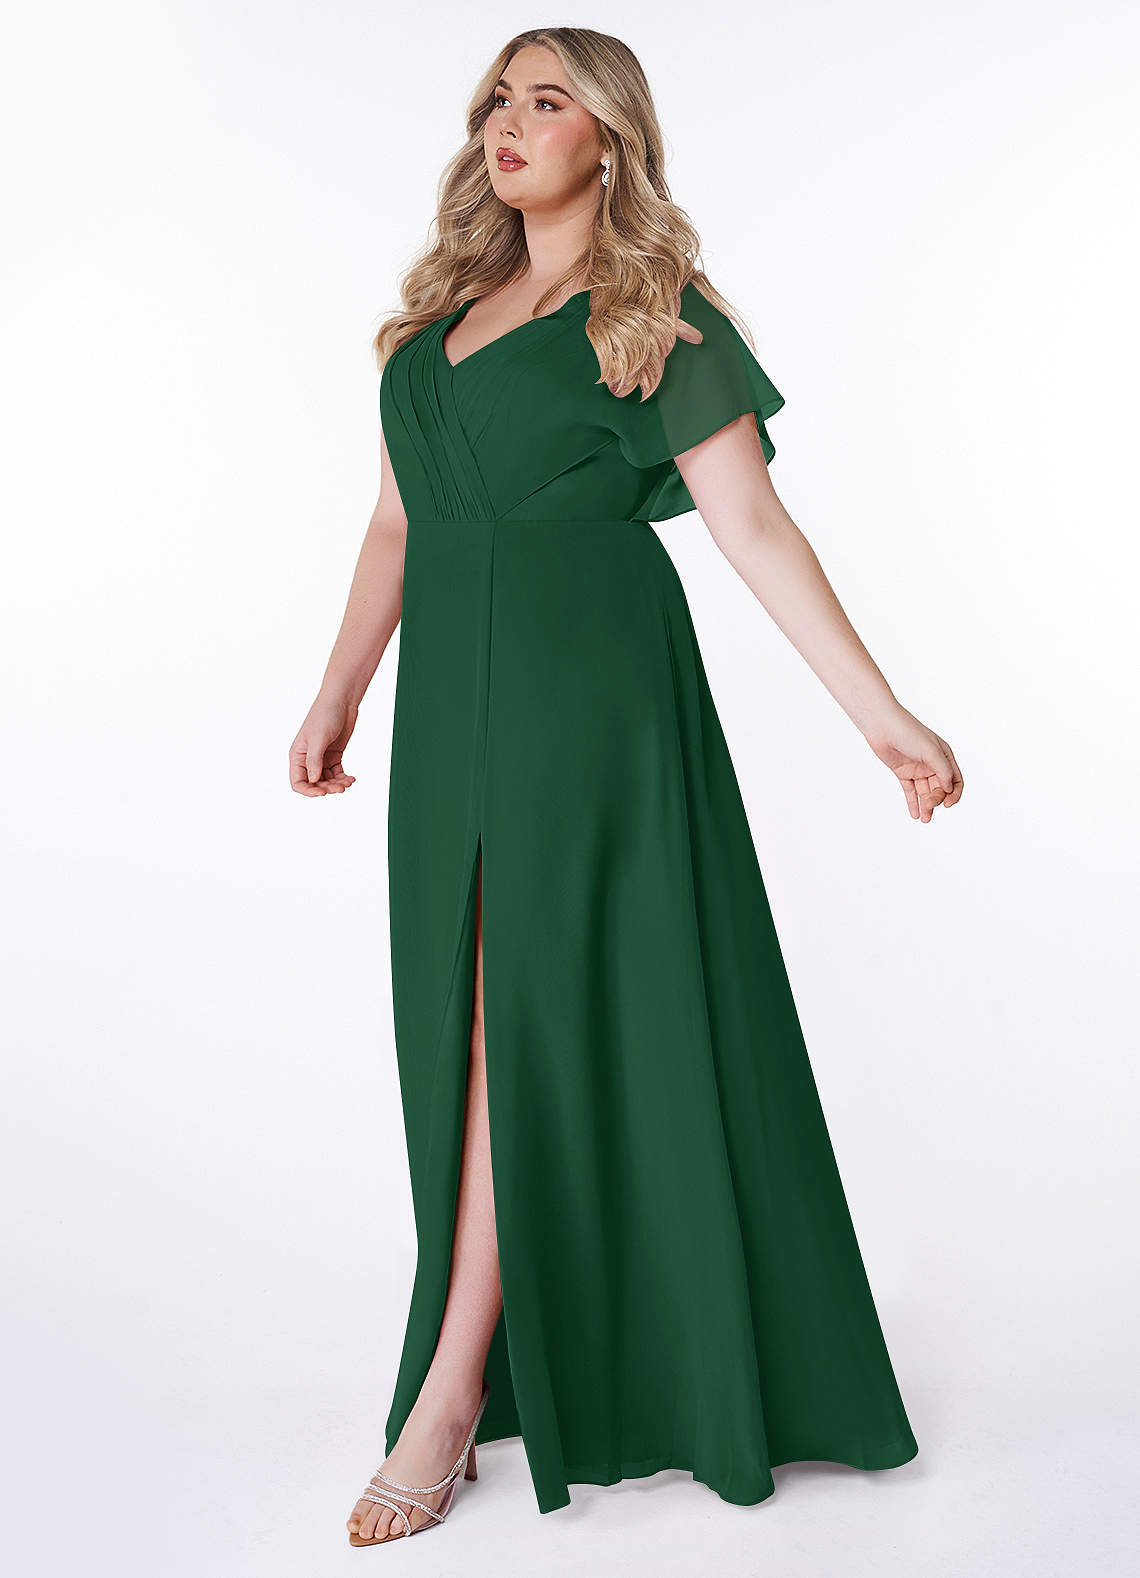 Azazie Rylee Bridesmaid Dresses A-Line Pleated Chiffon Floor-Length Dress image1